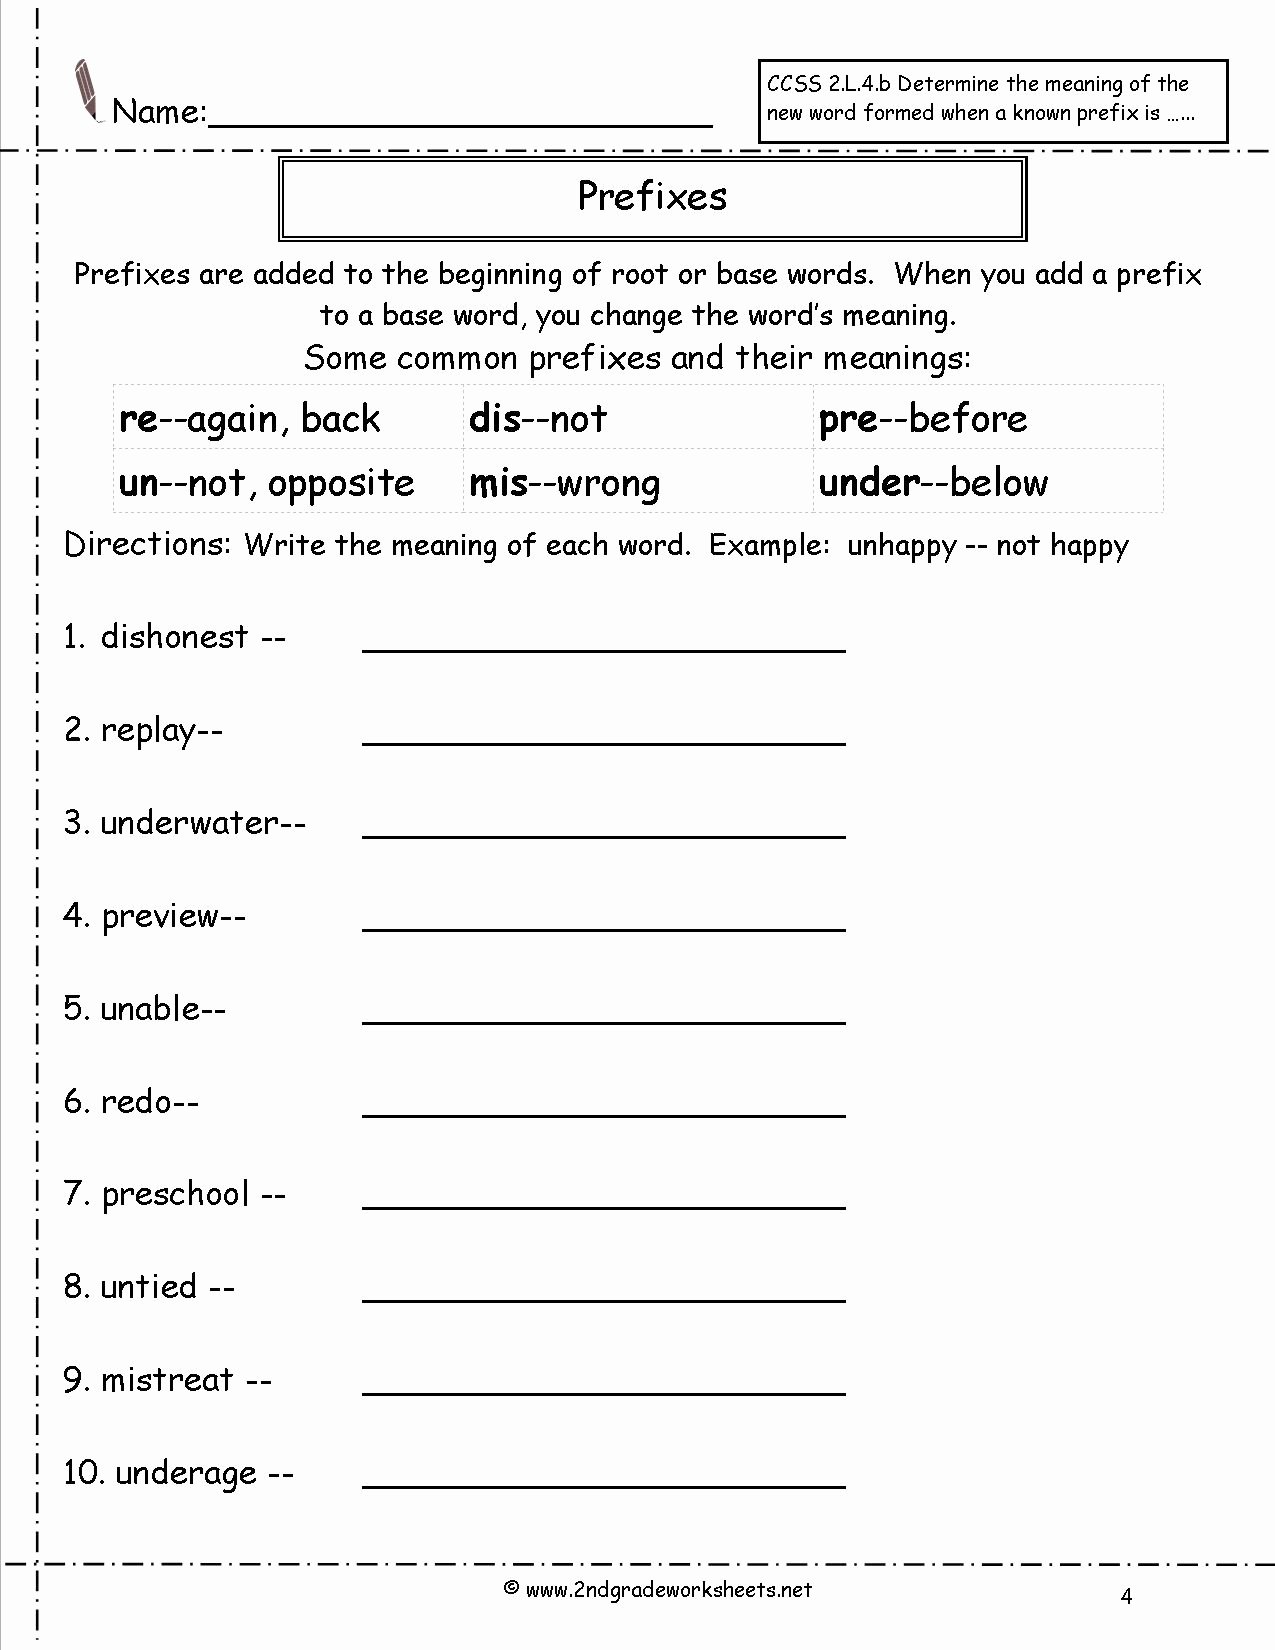 Prefixes Worksheet 2nd Grade Awesome Second Grade Prefixes Worksheets